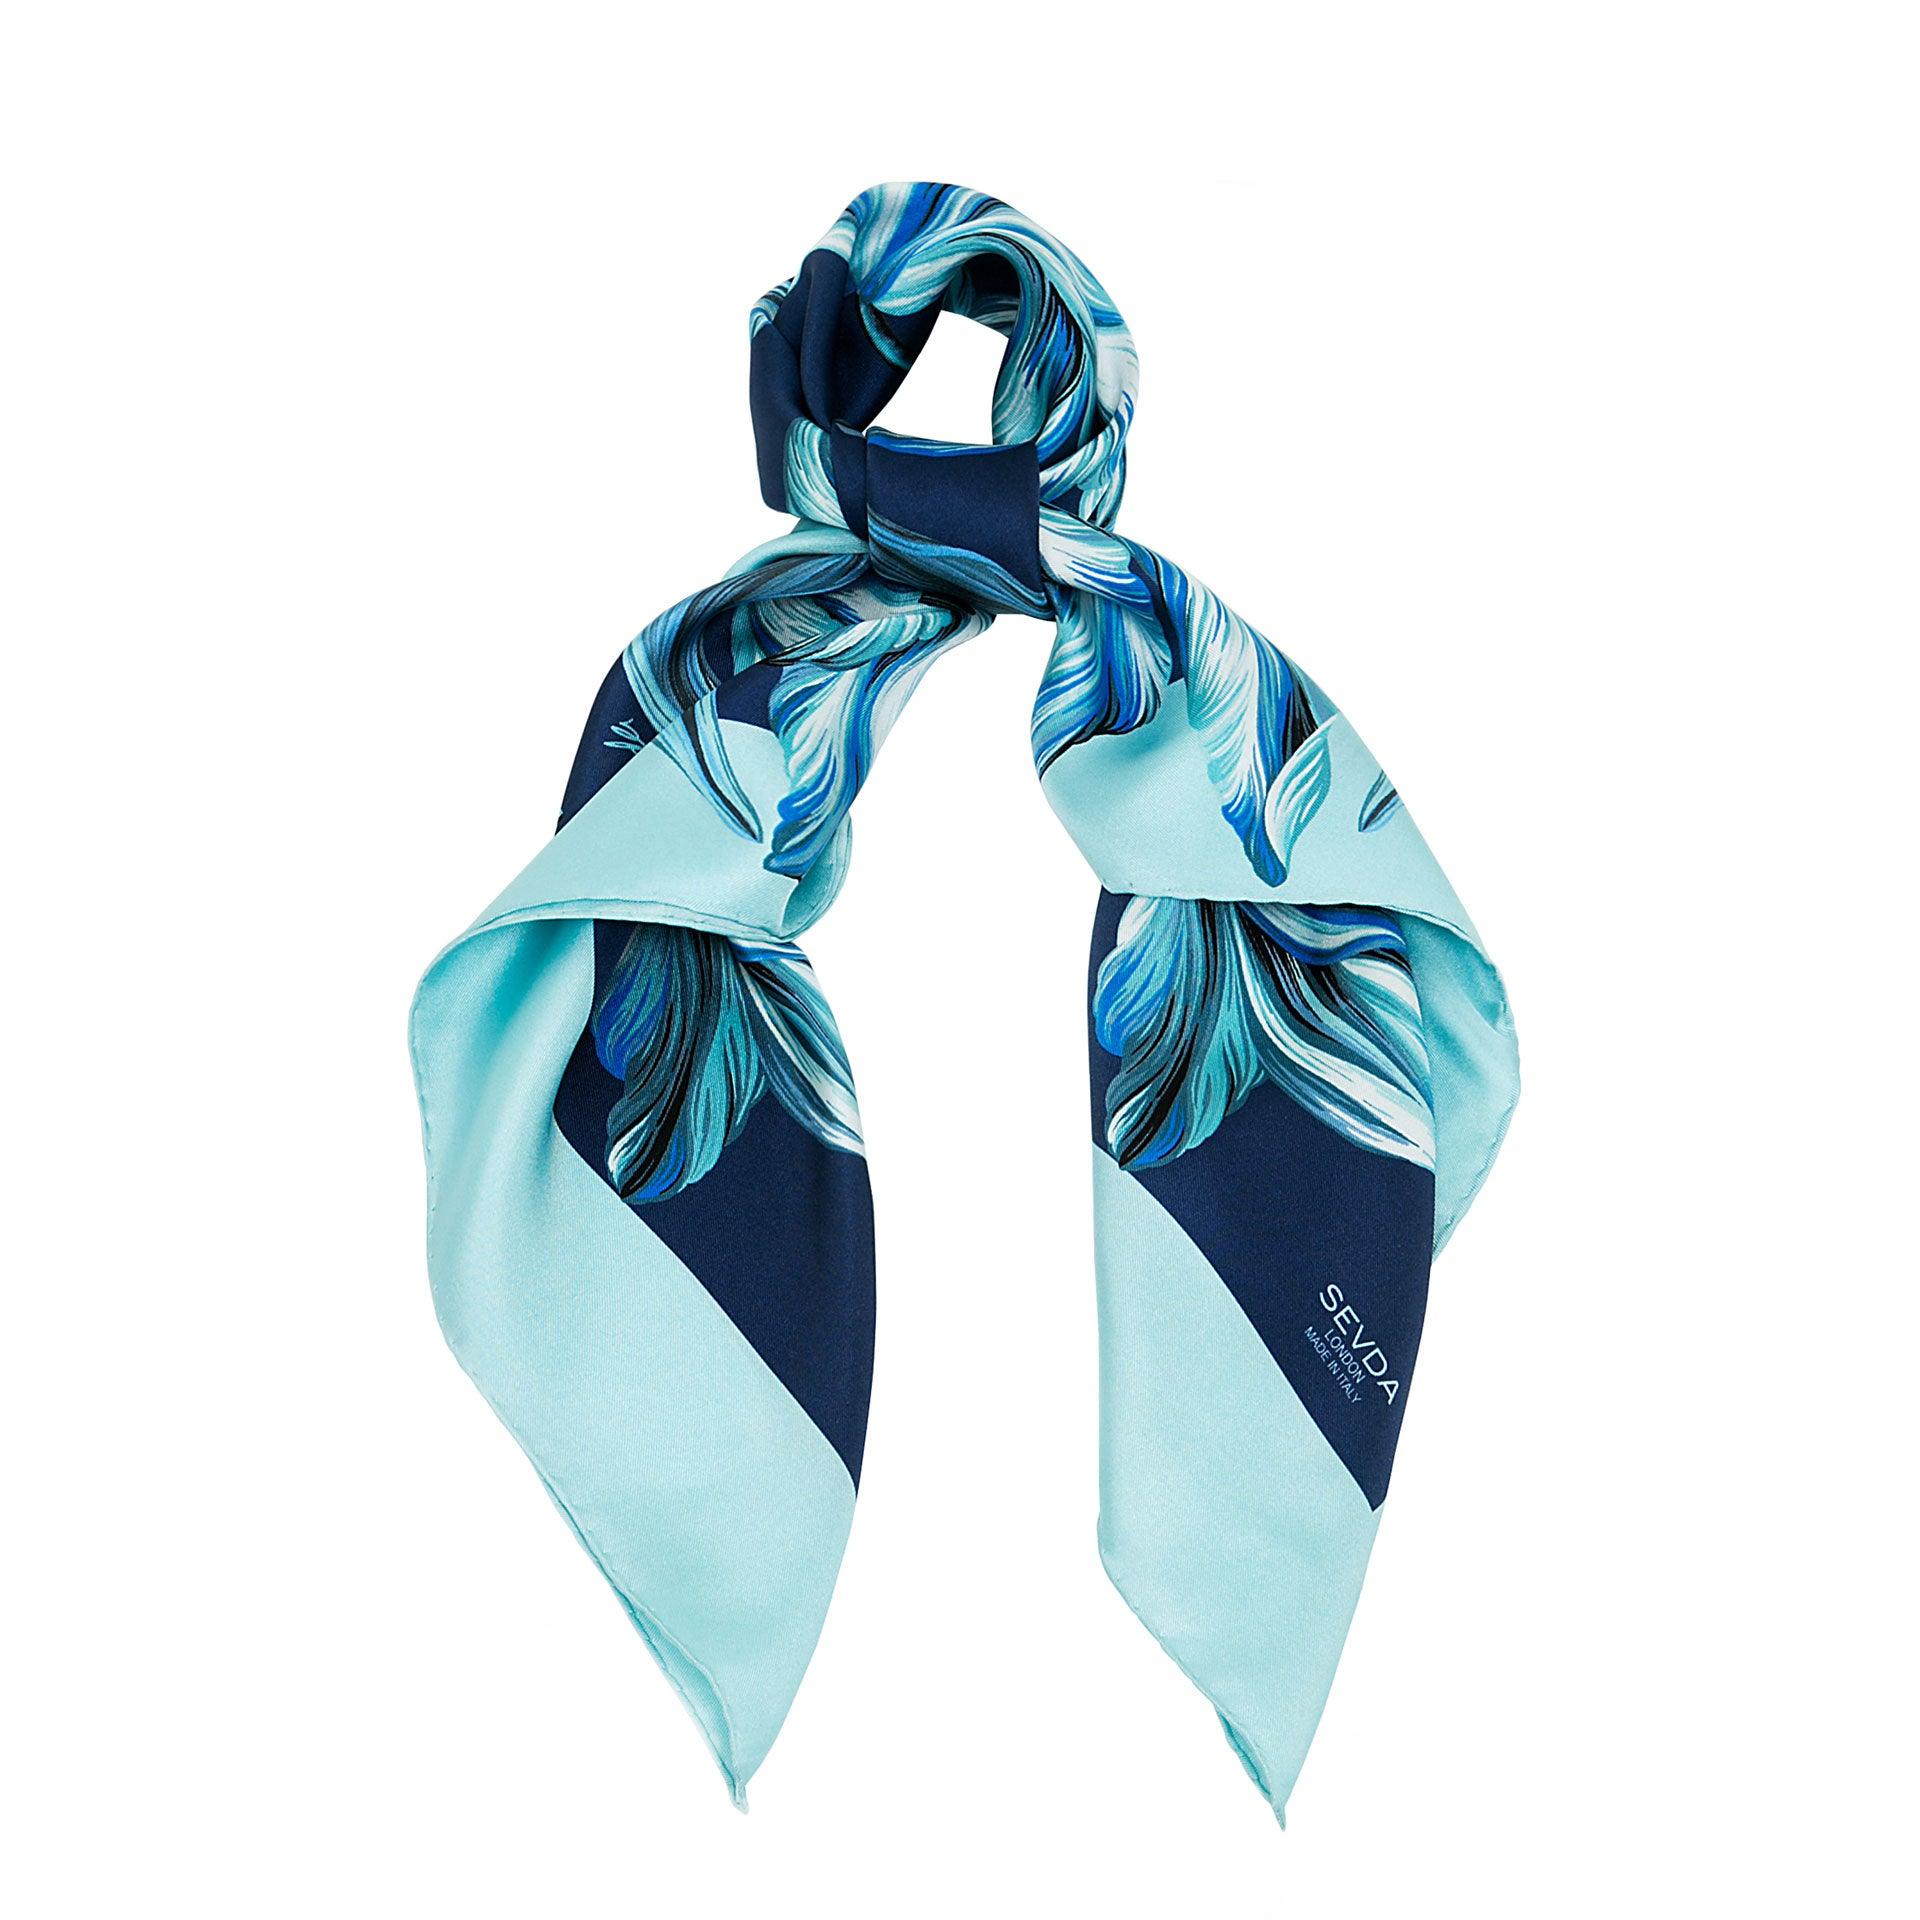 Blue British Tulip Garden Silk Scarf - Fusion of London's design and Italian craftsmanship, an exquisite gift choice.